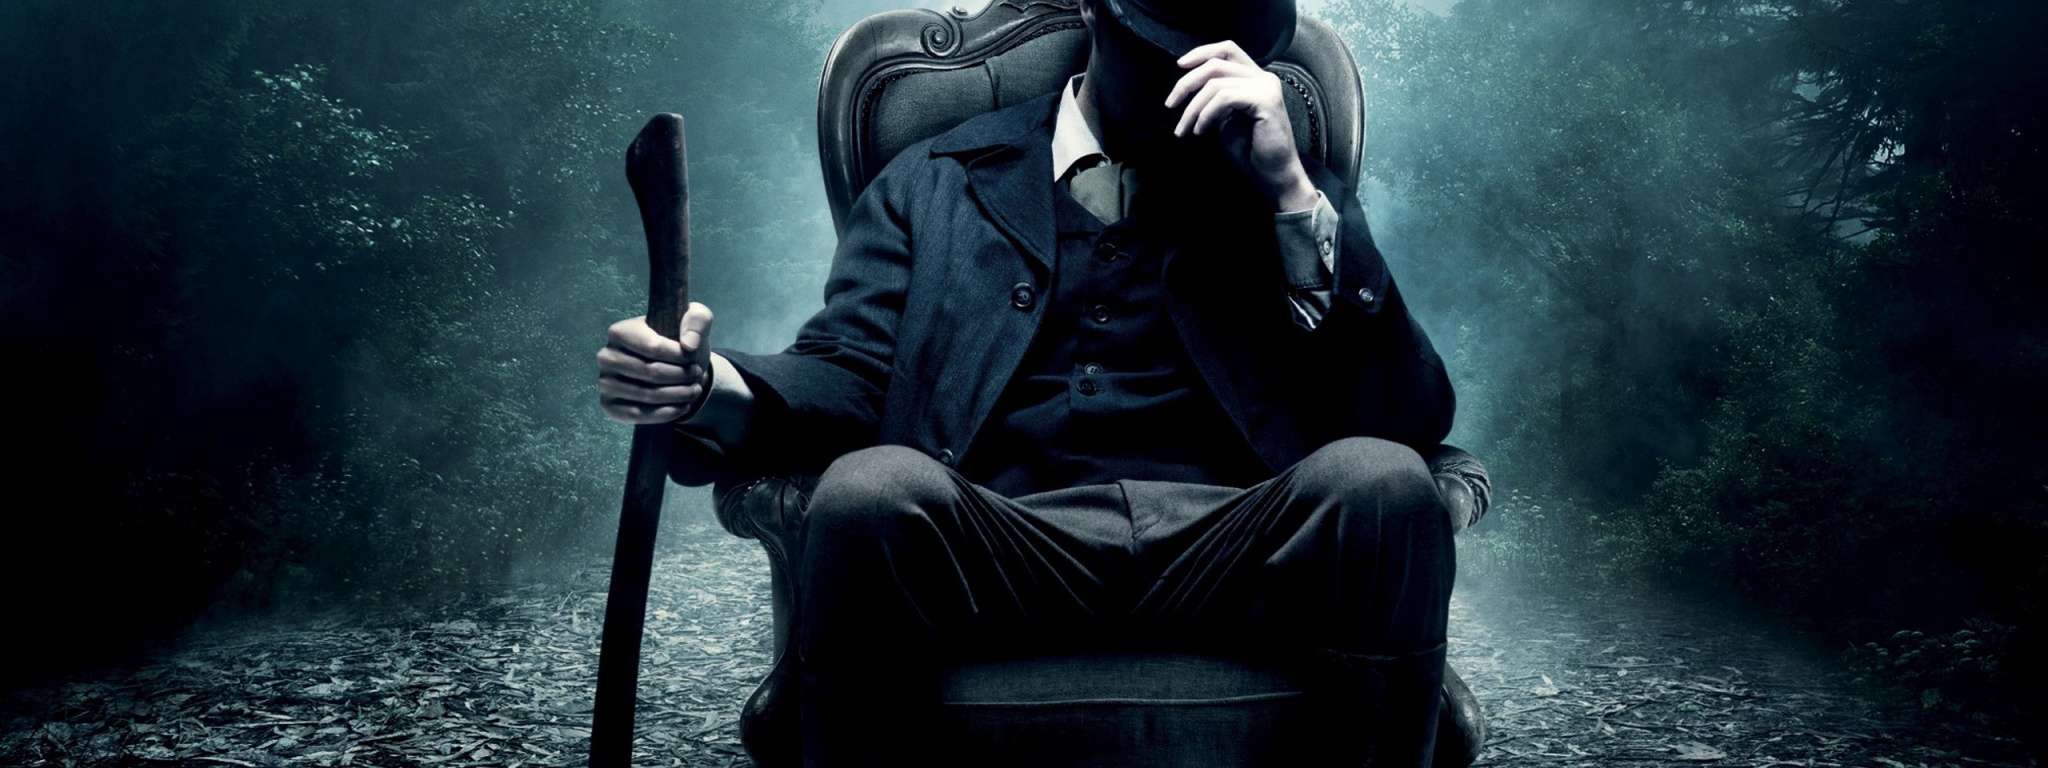 Abraham Lincoln Vampire Hunter